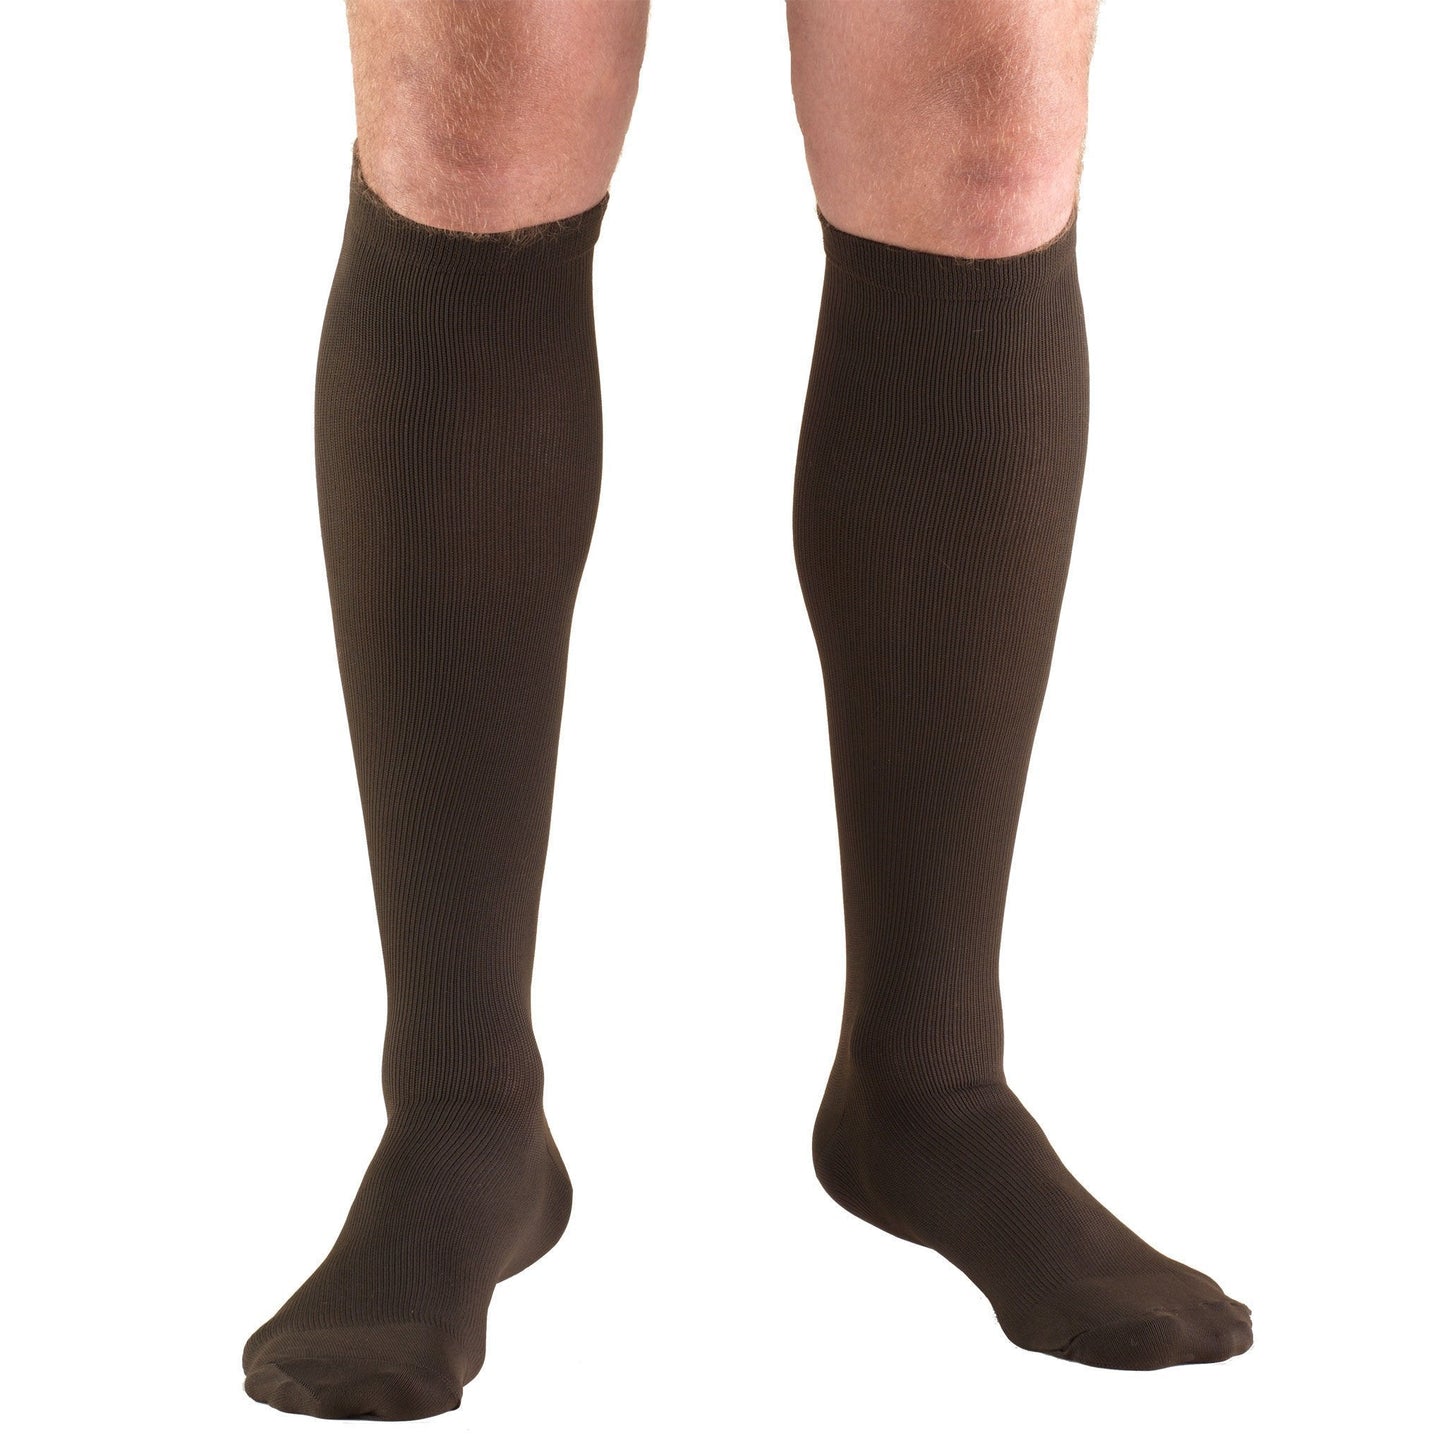 Truform Men's Dress 30-40 mmHg Knee High, Brown